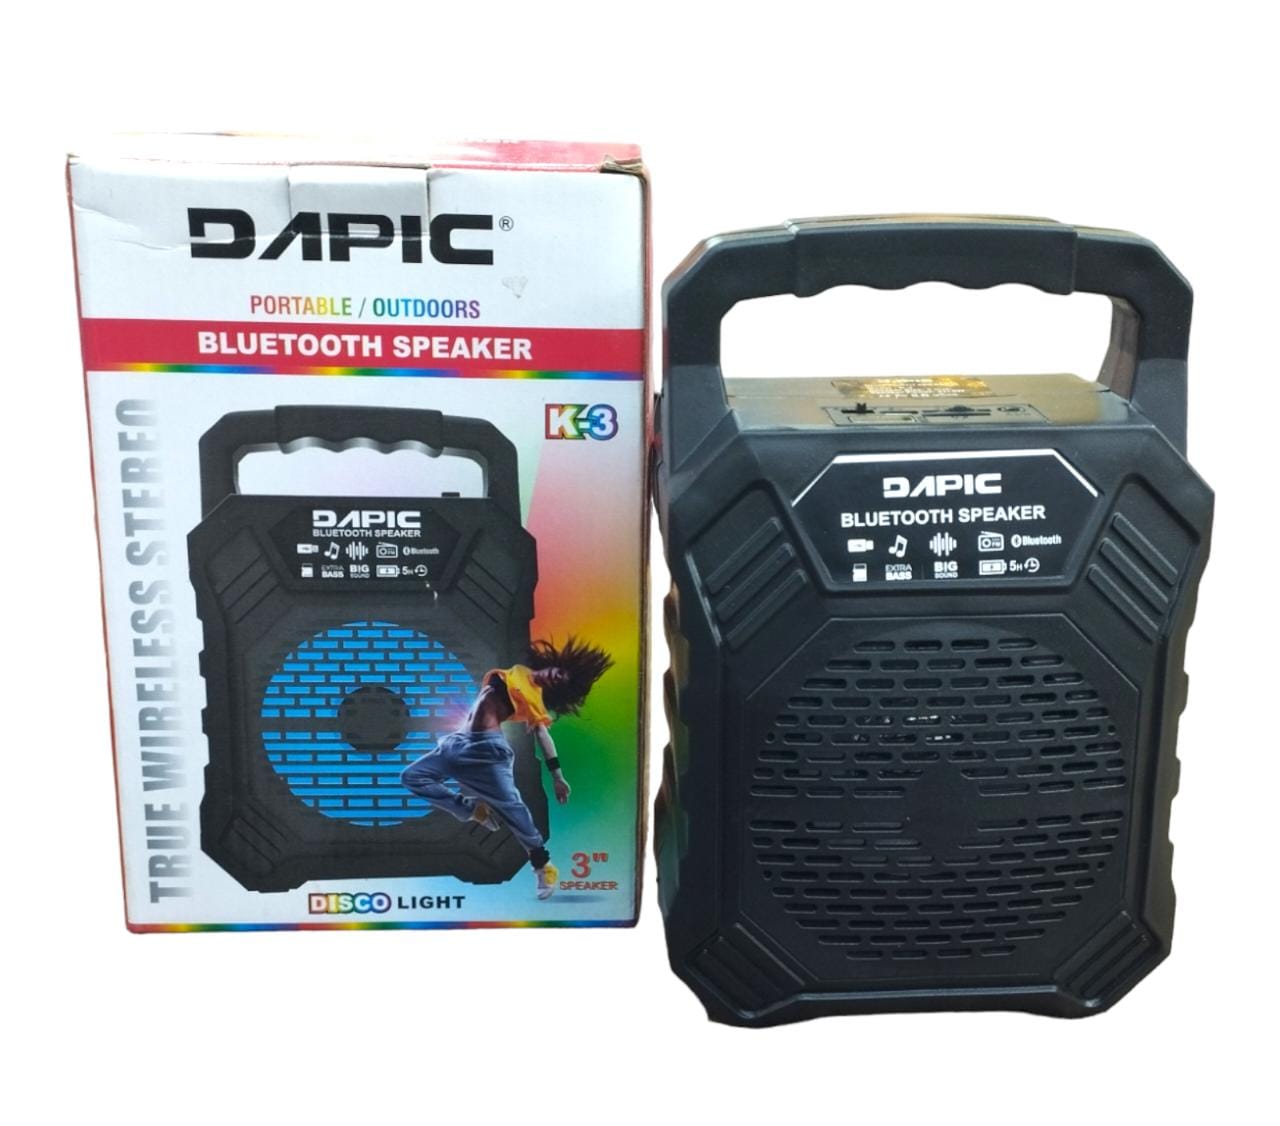 Dapic portable outdoors Bluetooth speaker 